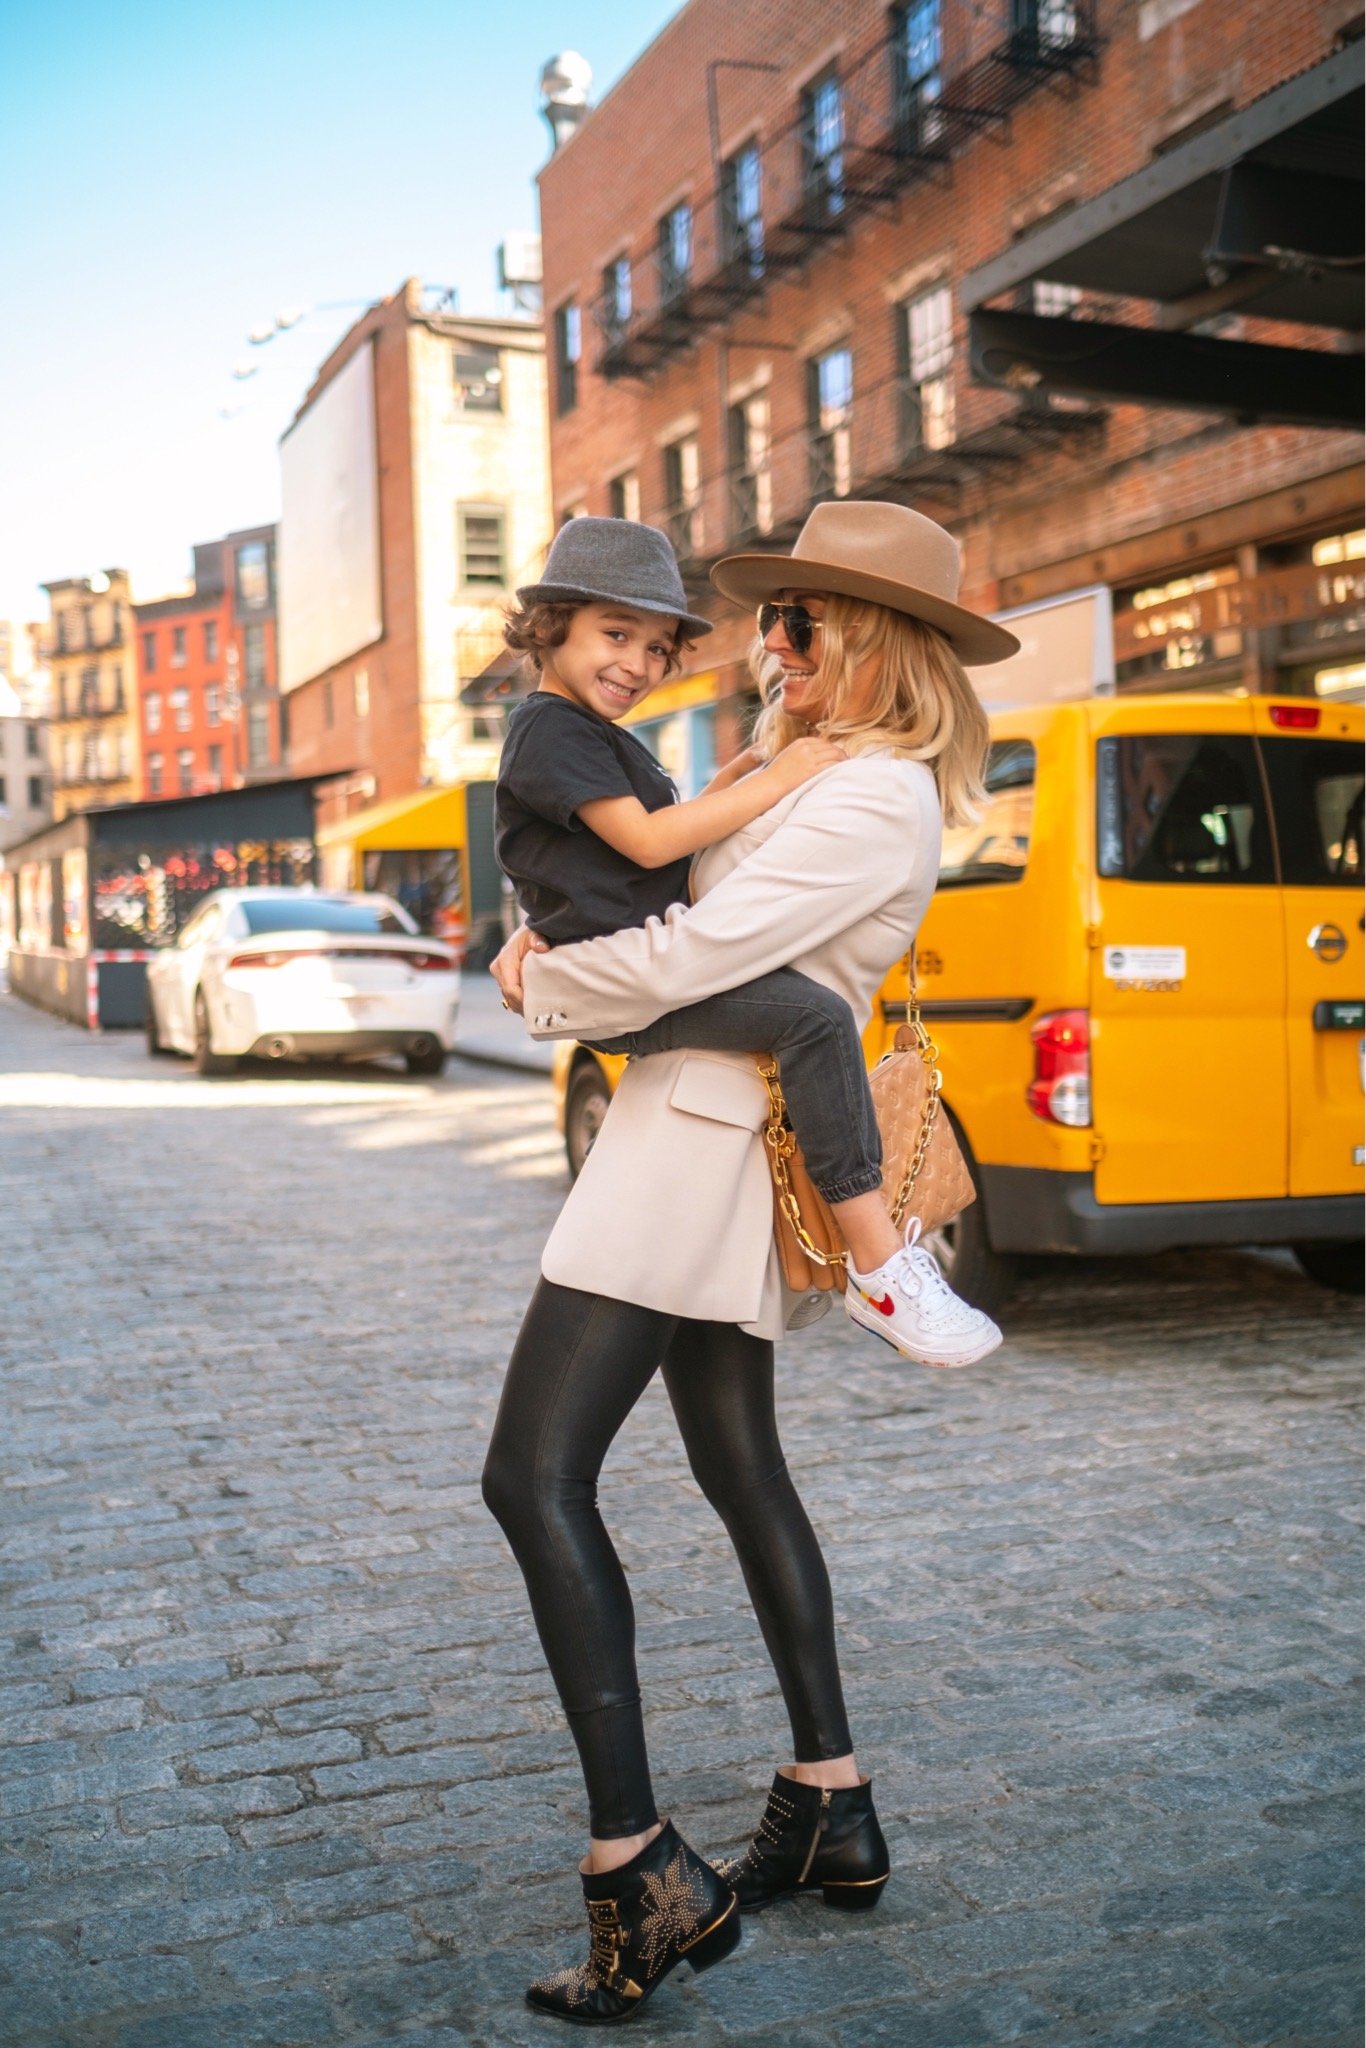 mom holding toddler in city street